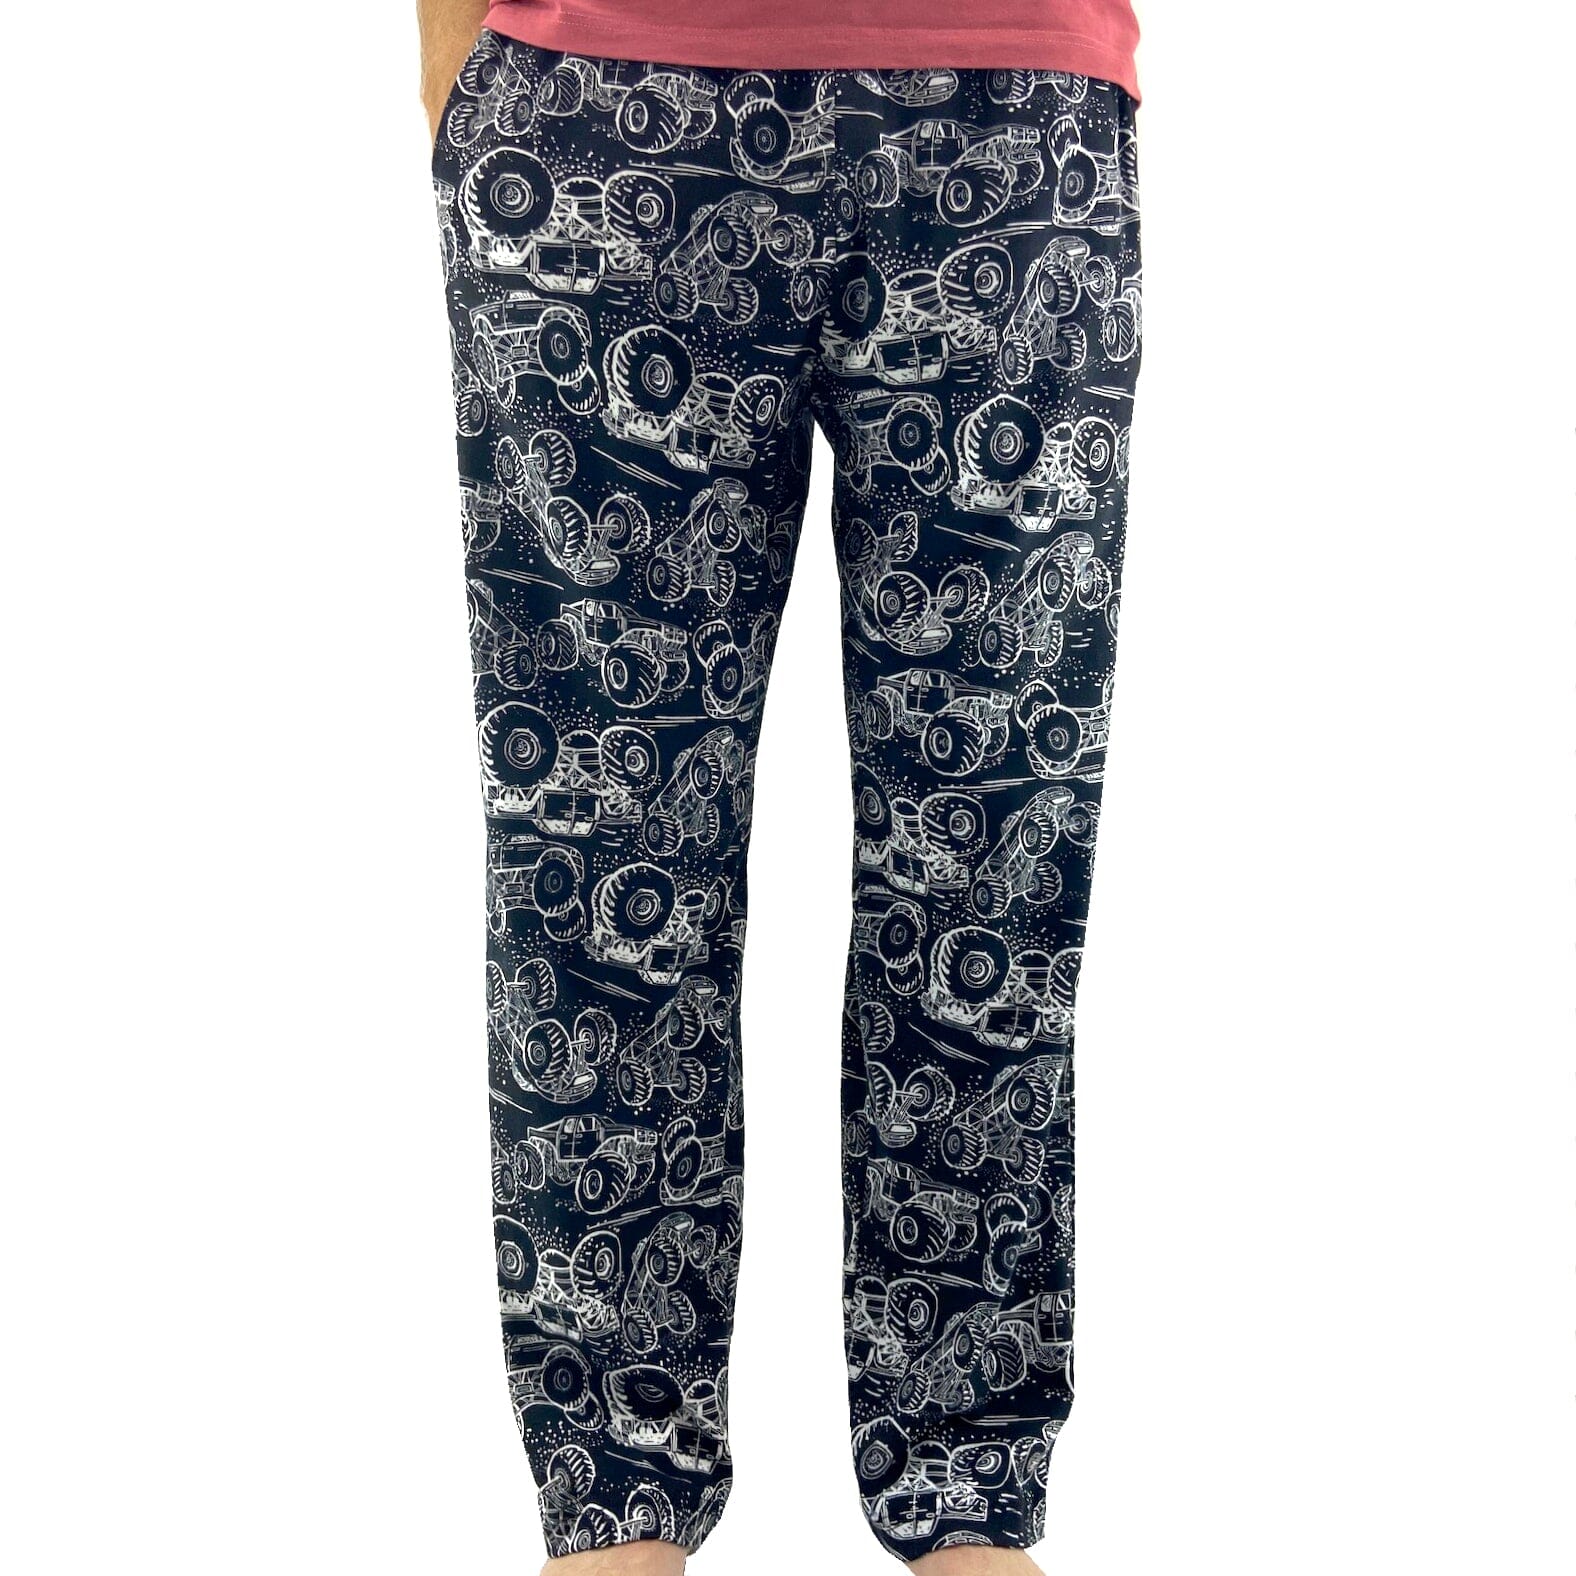 Men's Black Monster Truck Patterned Cotton Knit Long Pajama PJ Pants